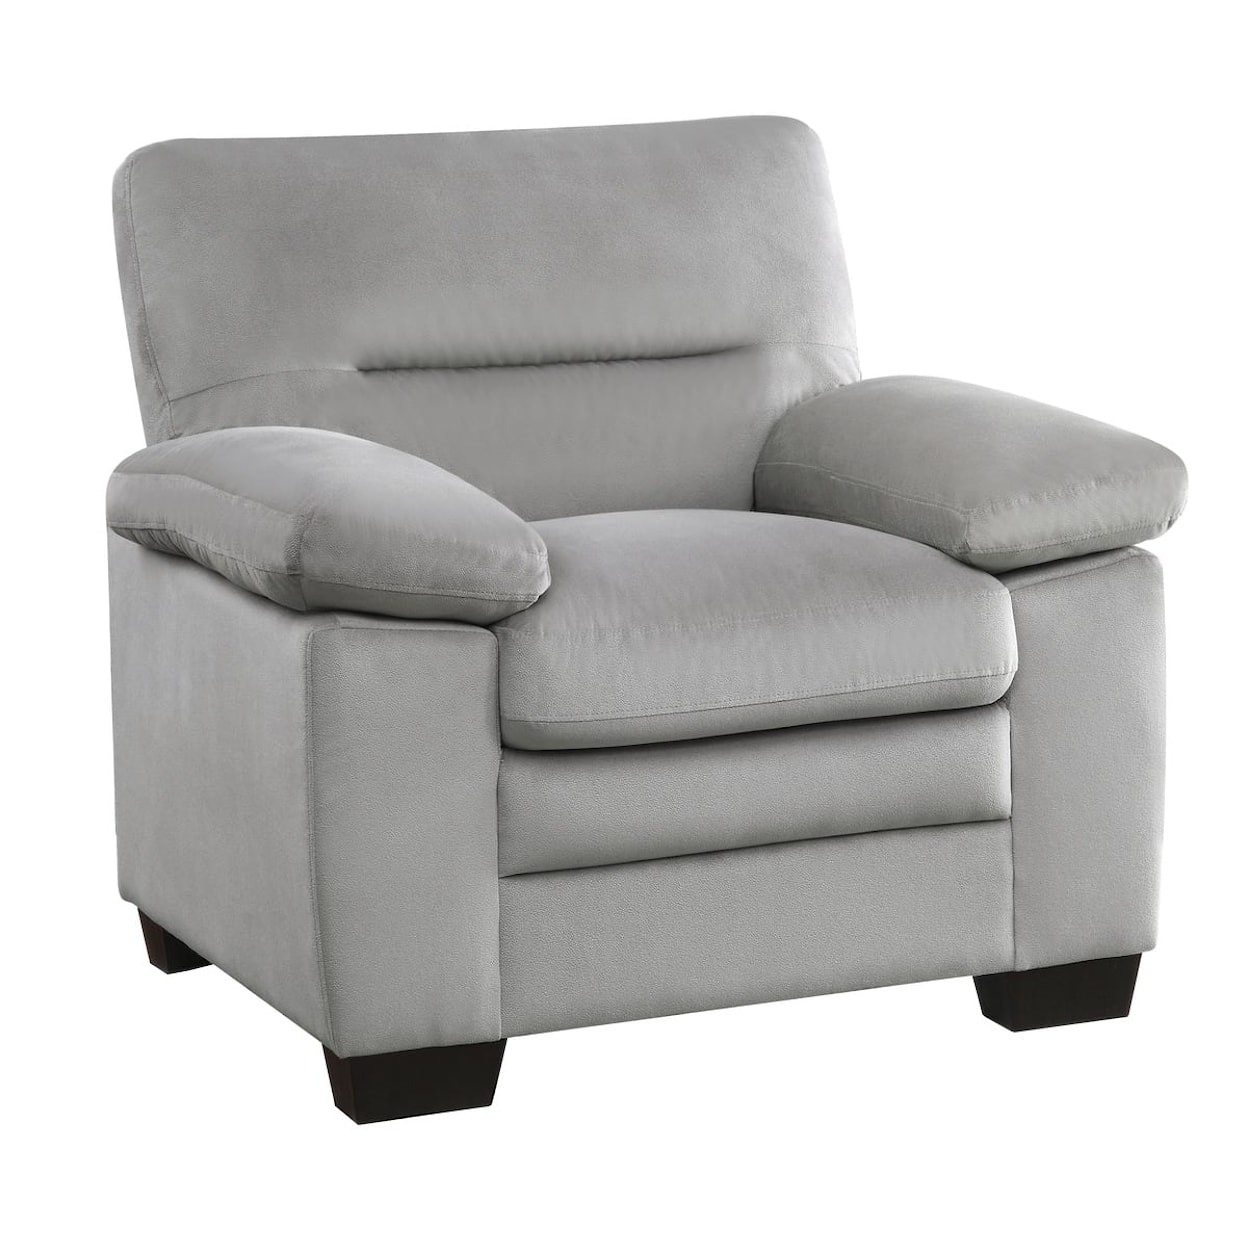 Homelegance Furniture Keighly Chair